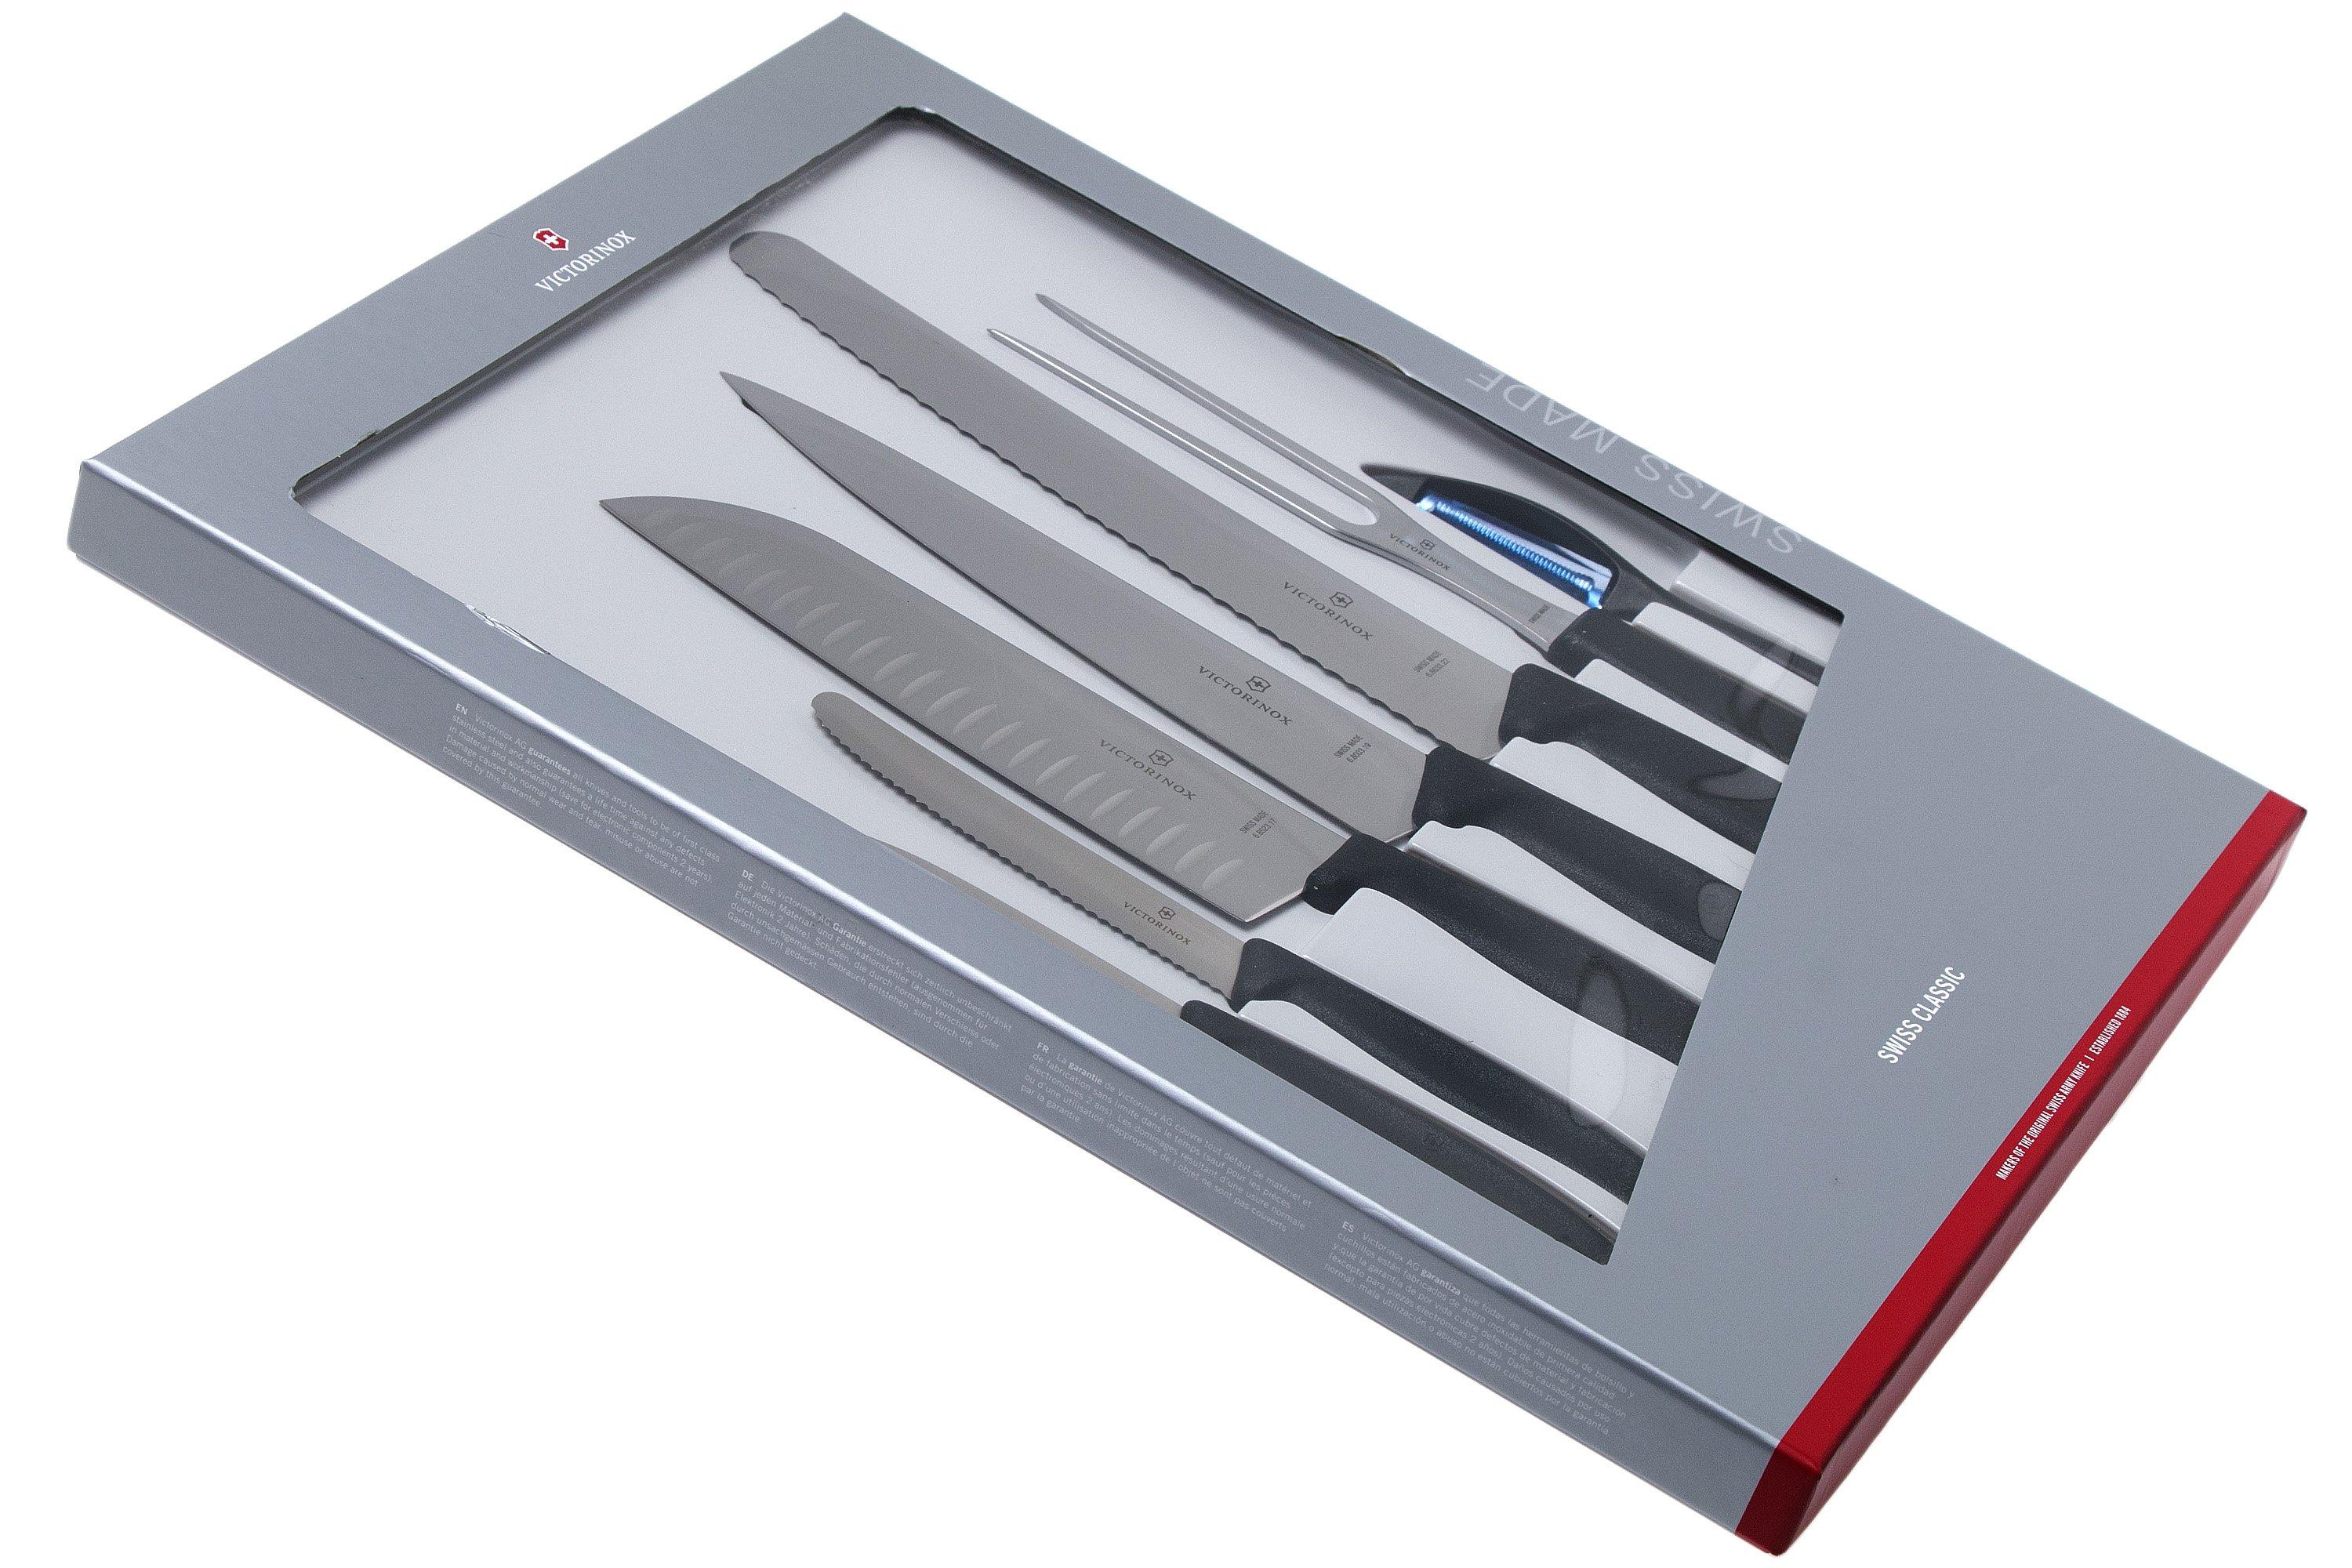 Swiss Classic 7-Piece Kitchen Knife Set by Victorinox